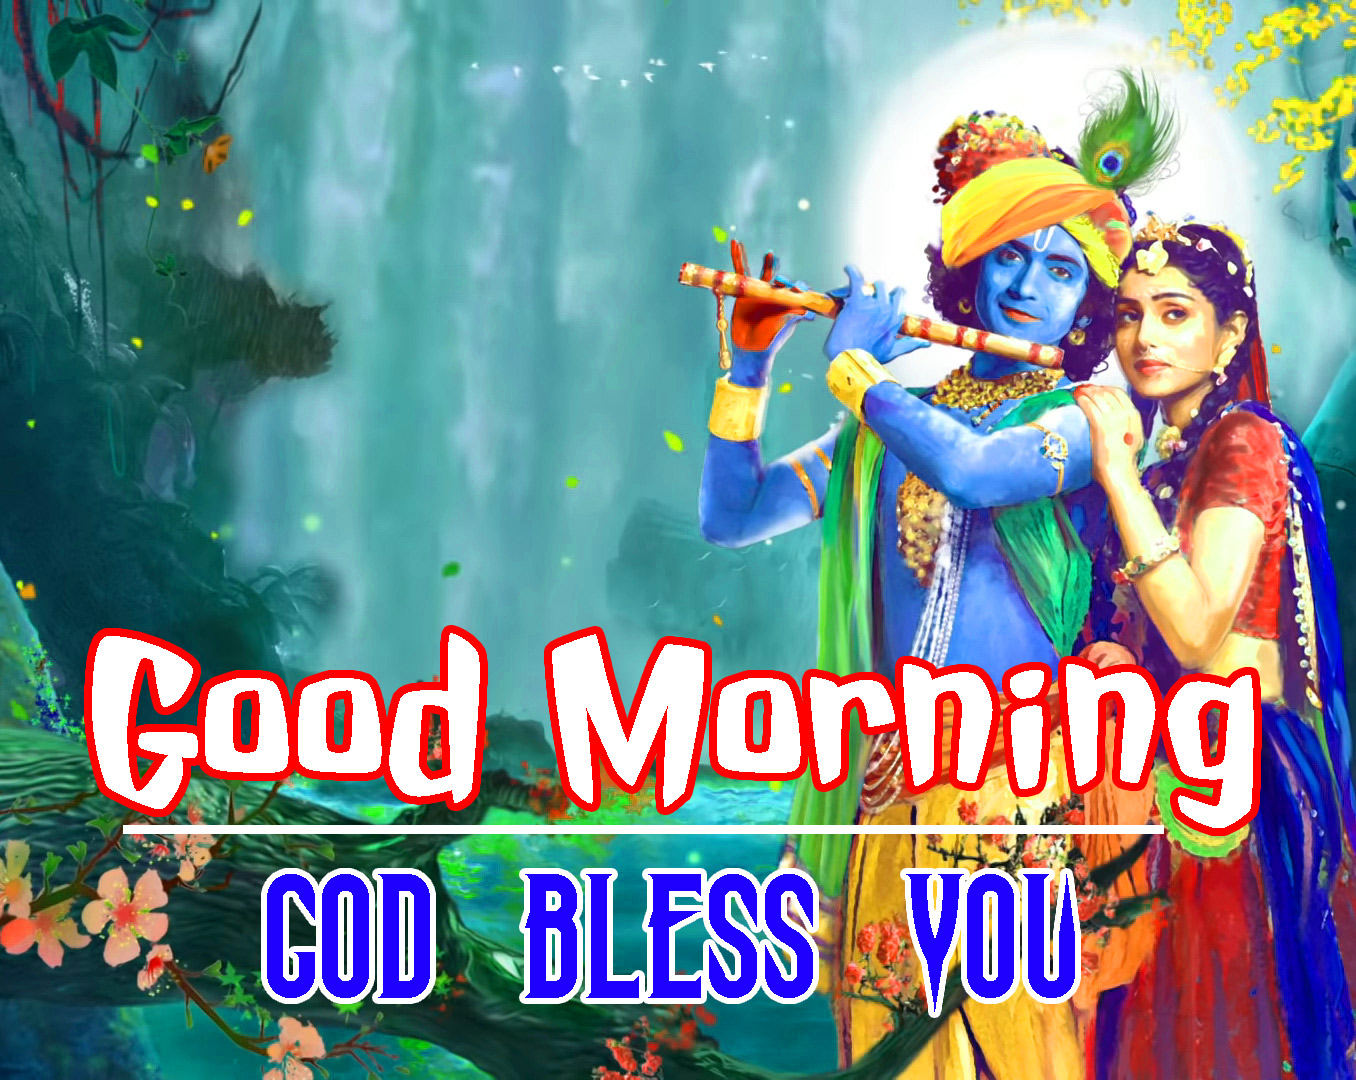 Radha Krishna god bless good morning images Pics 